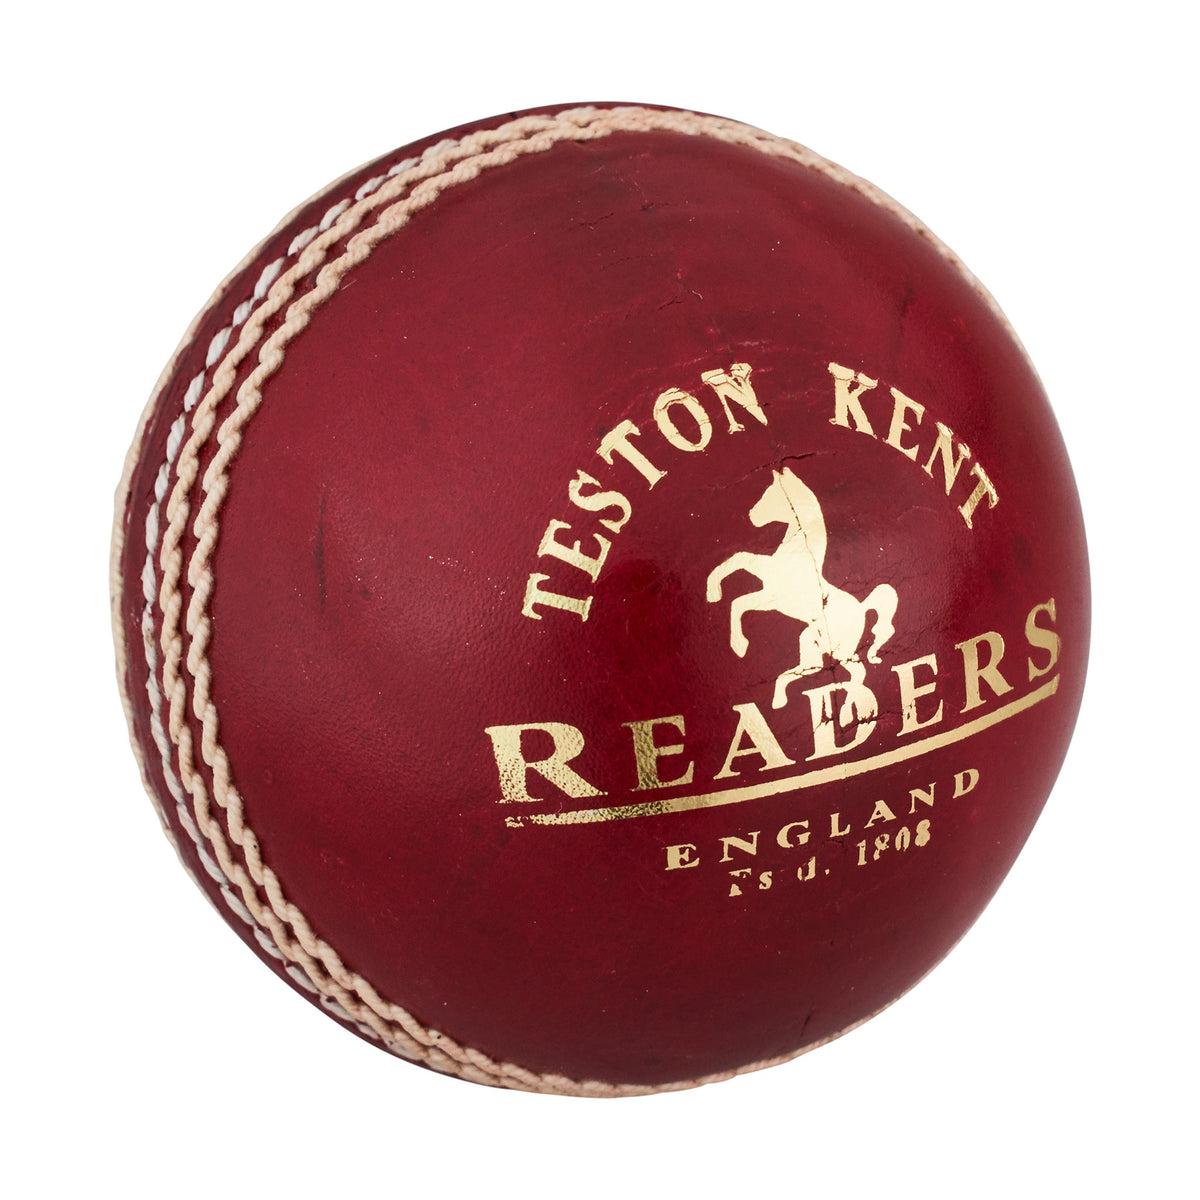 Readers County Supreme Womens Cricket Ball 4 3/4 oz